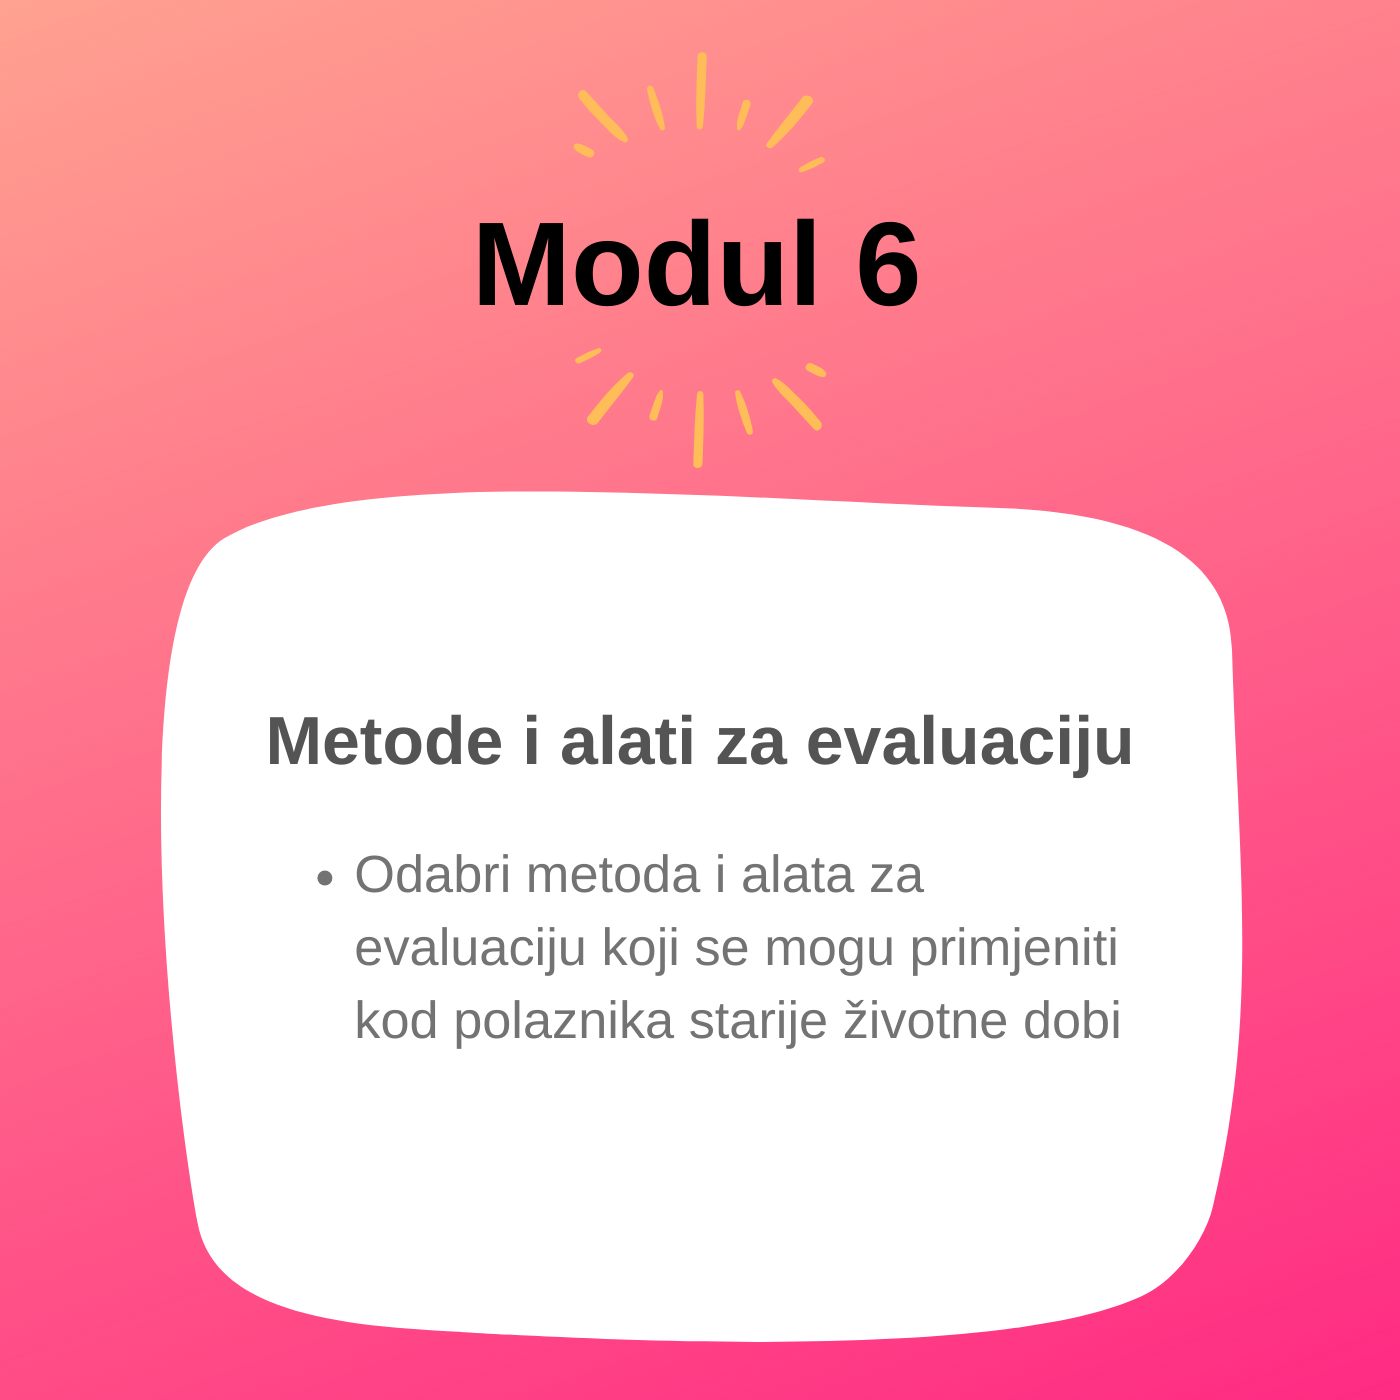 Go to Module 6